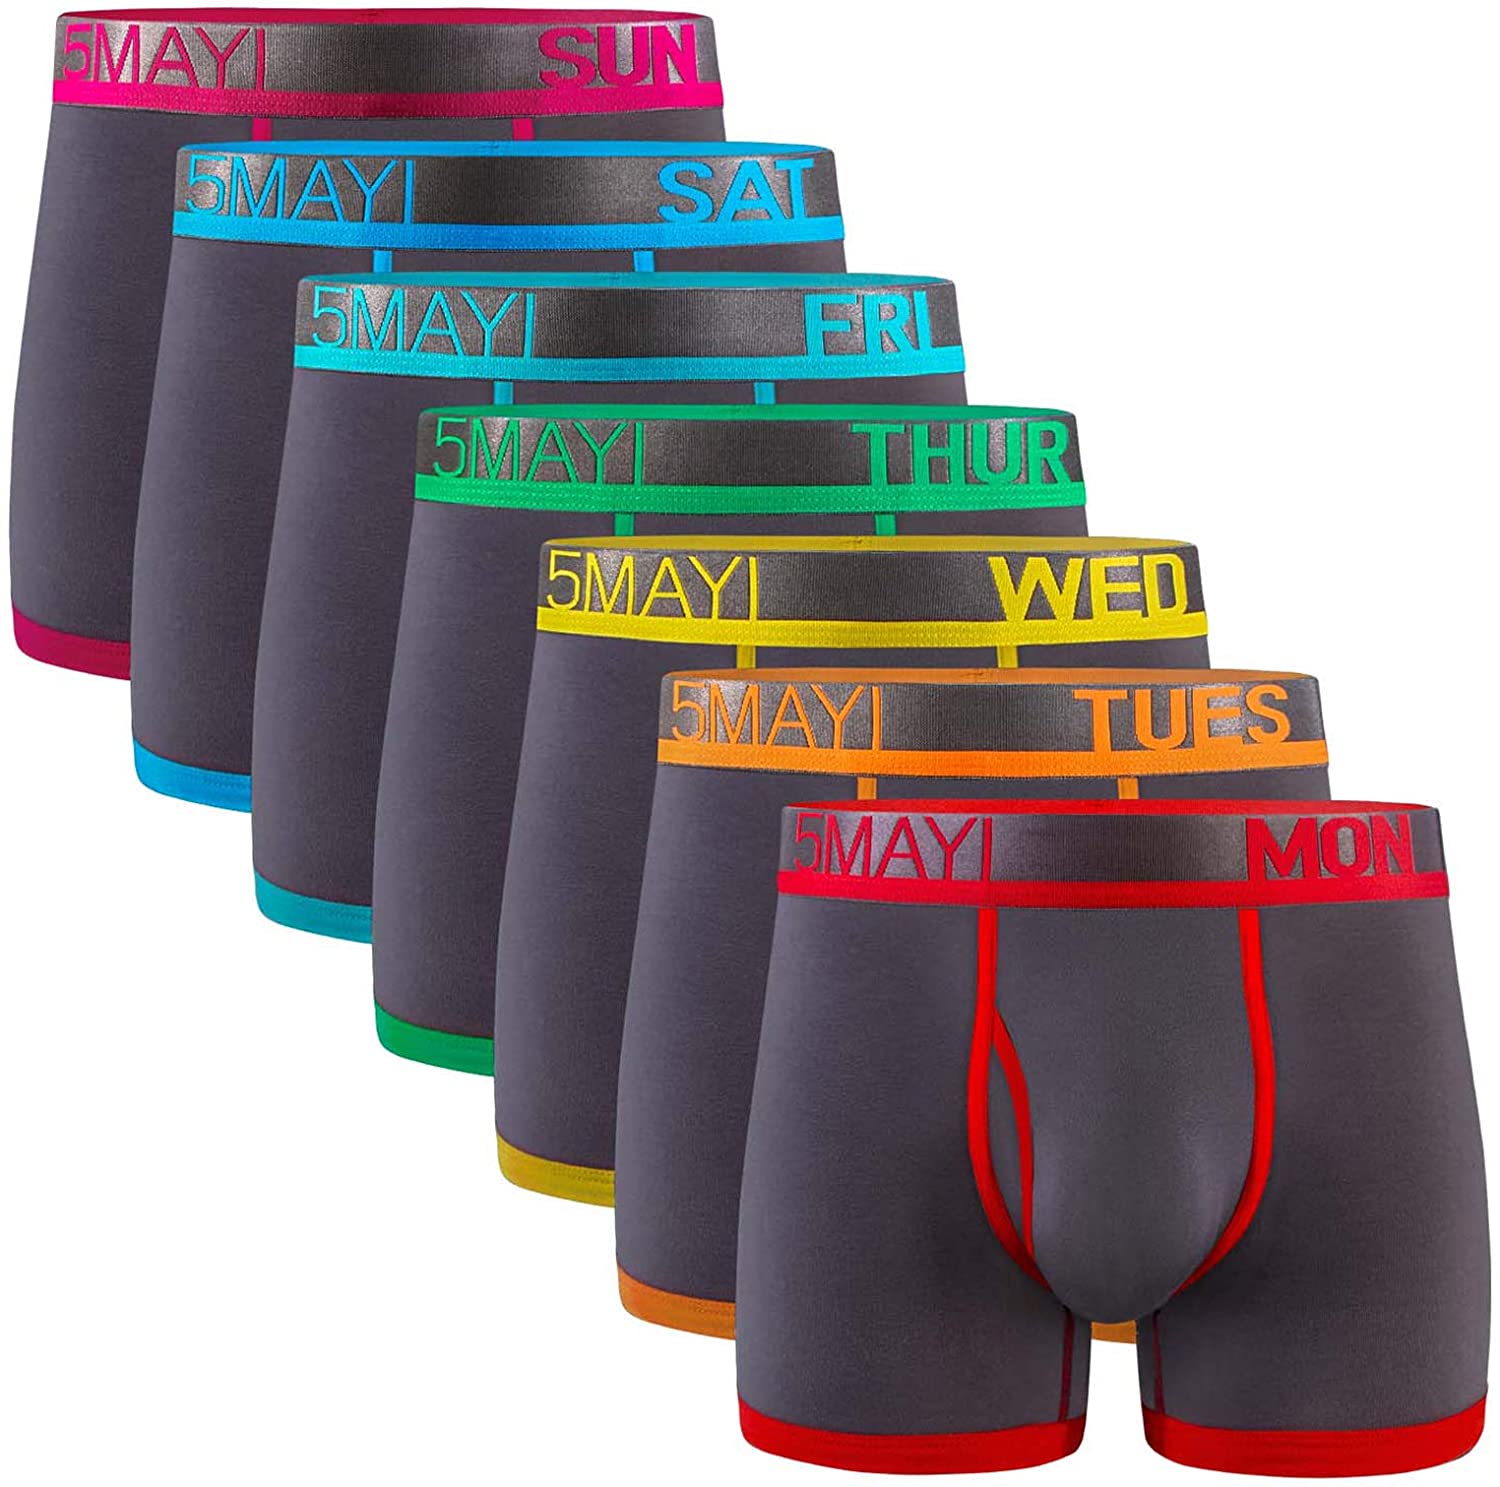 5Mayi Mens Underwear Boxer Briefs for Men Cotton Men's Boxer Briefs Black